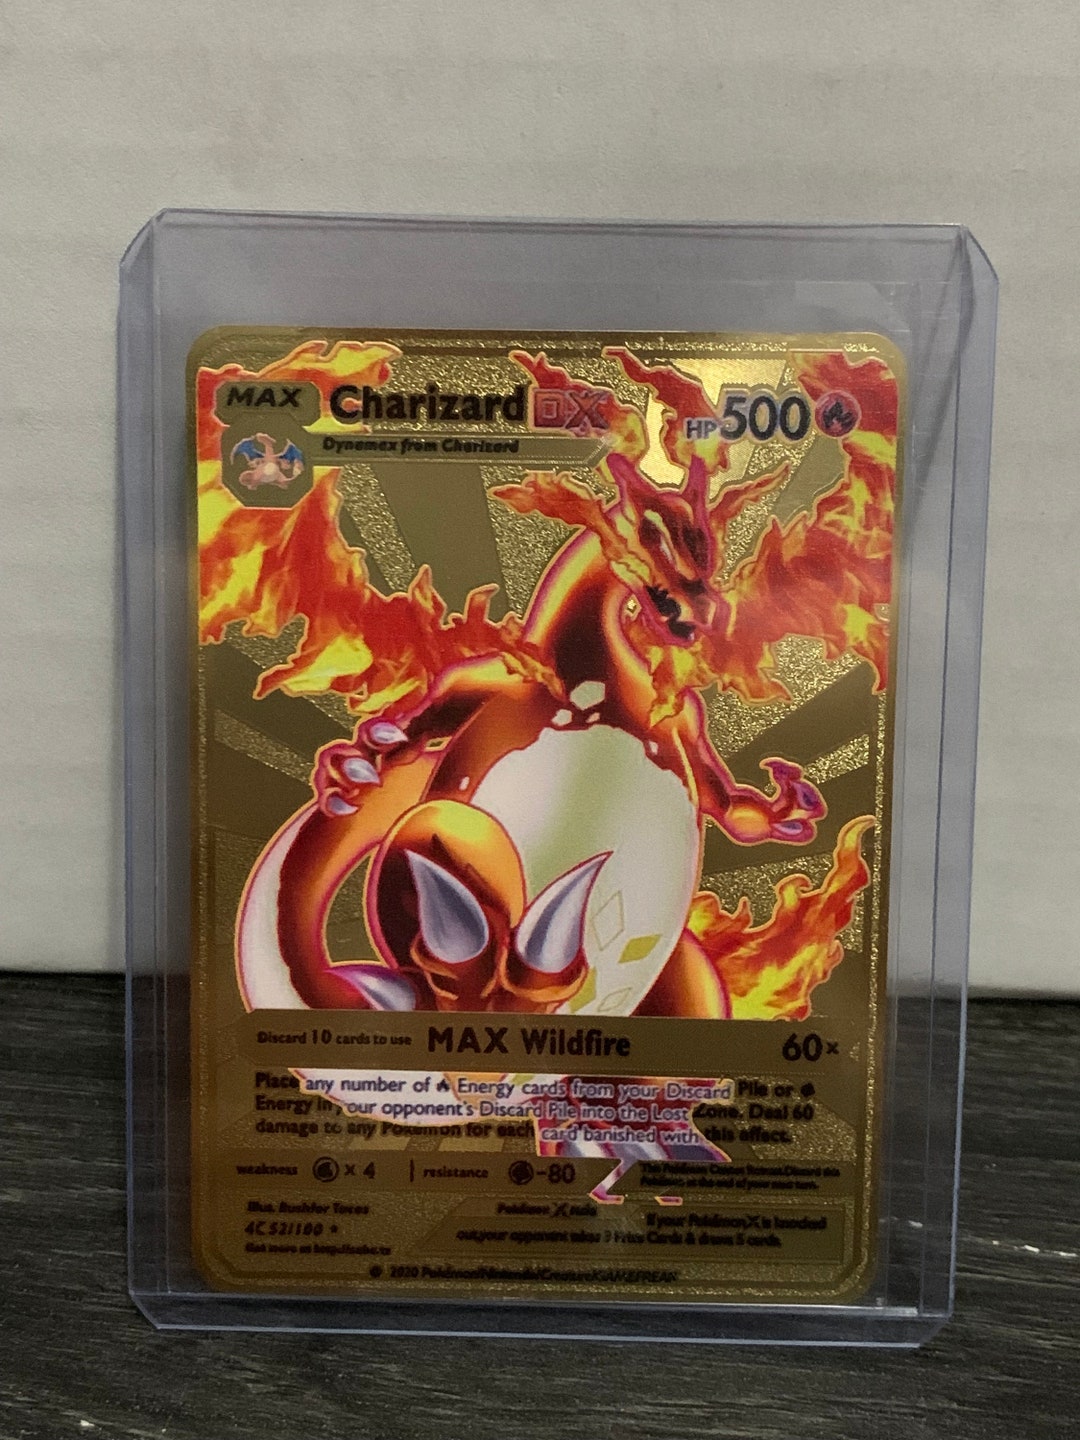 Pokémon Charizard DX Max Gold Metal Card Rare Shiny Gold - Etsy Canada